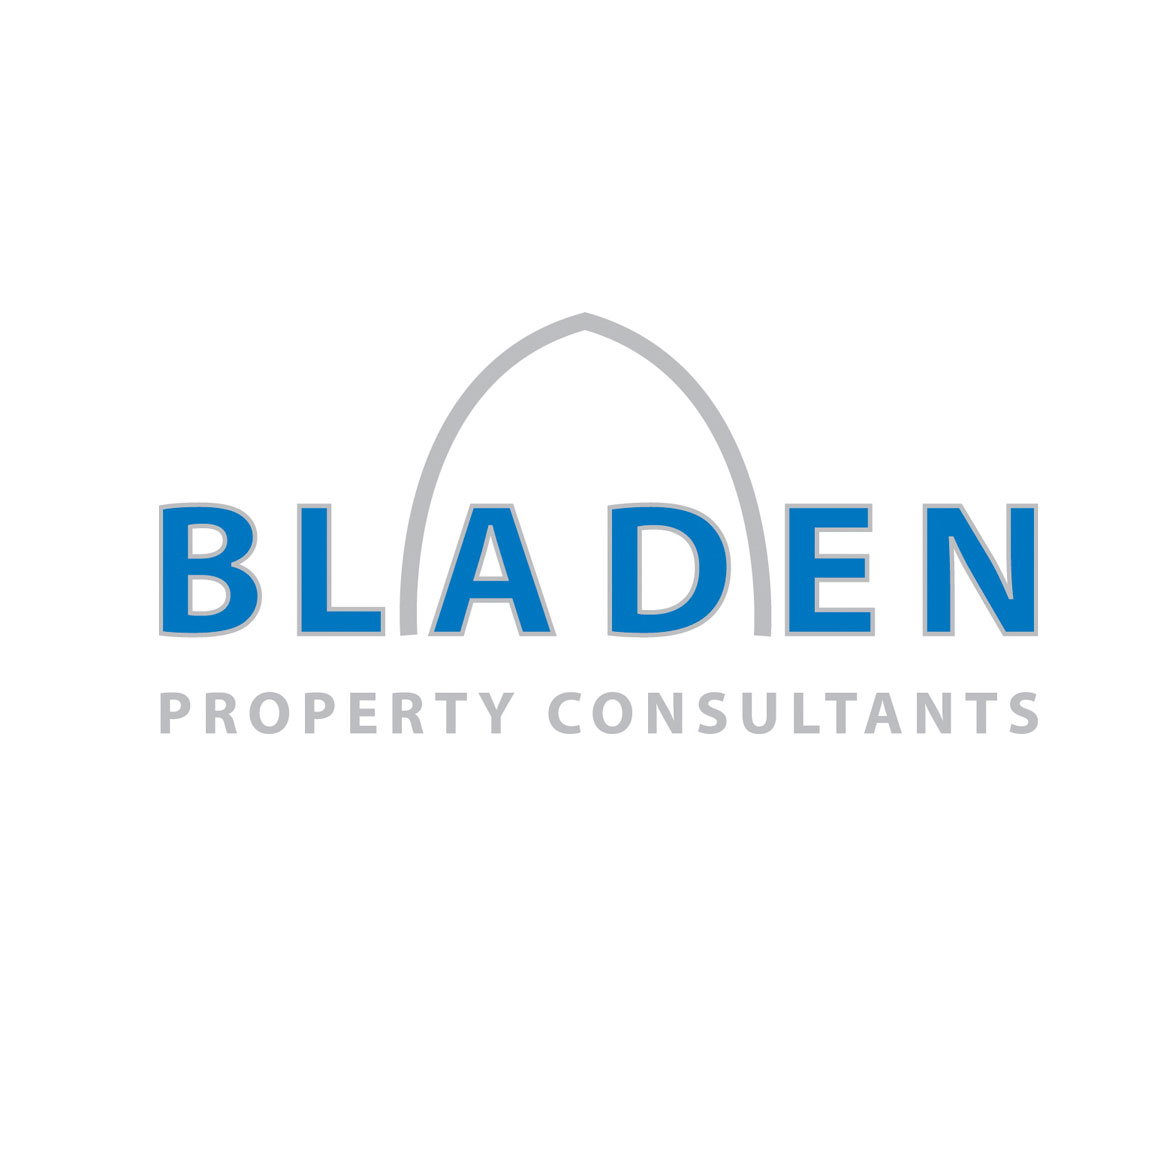 Property company logo